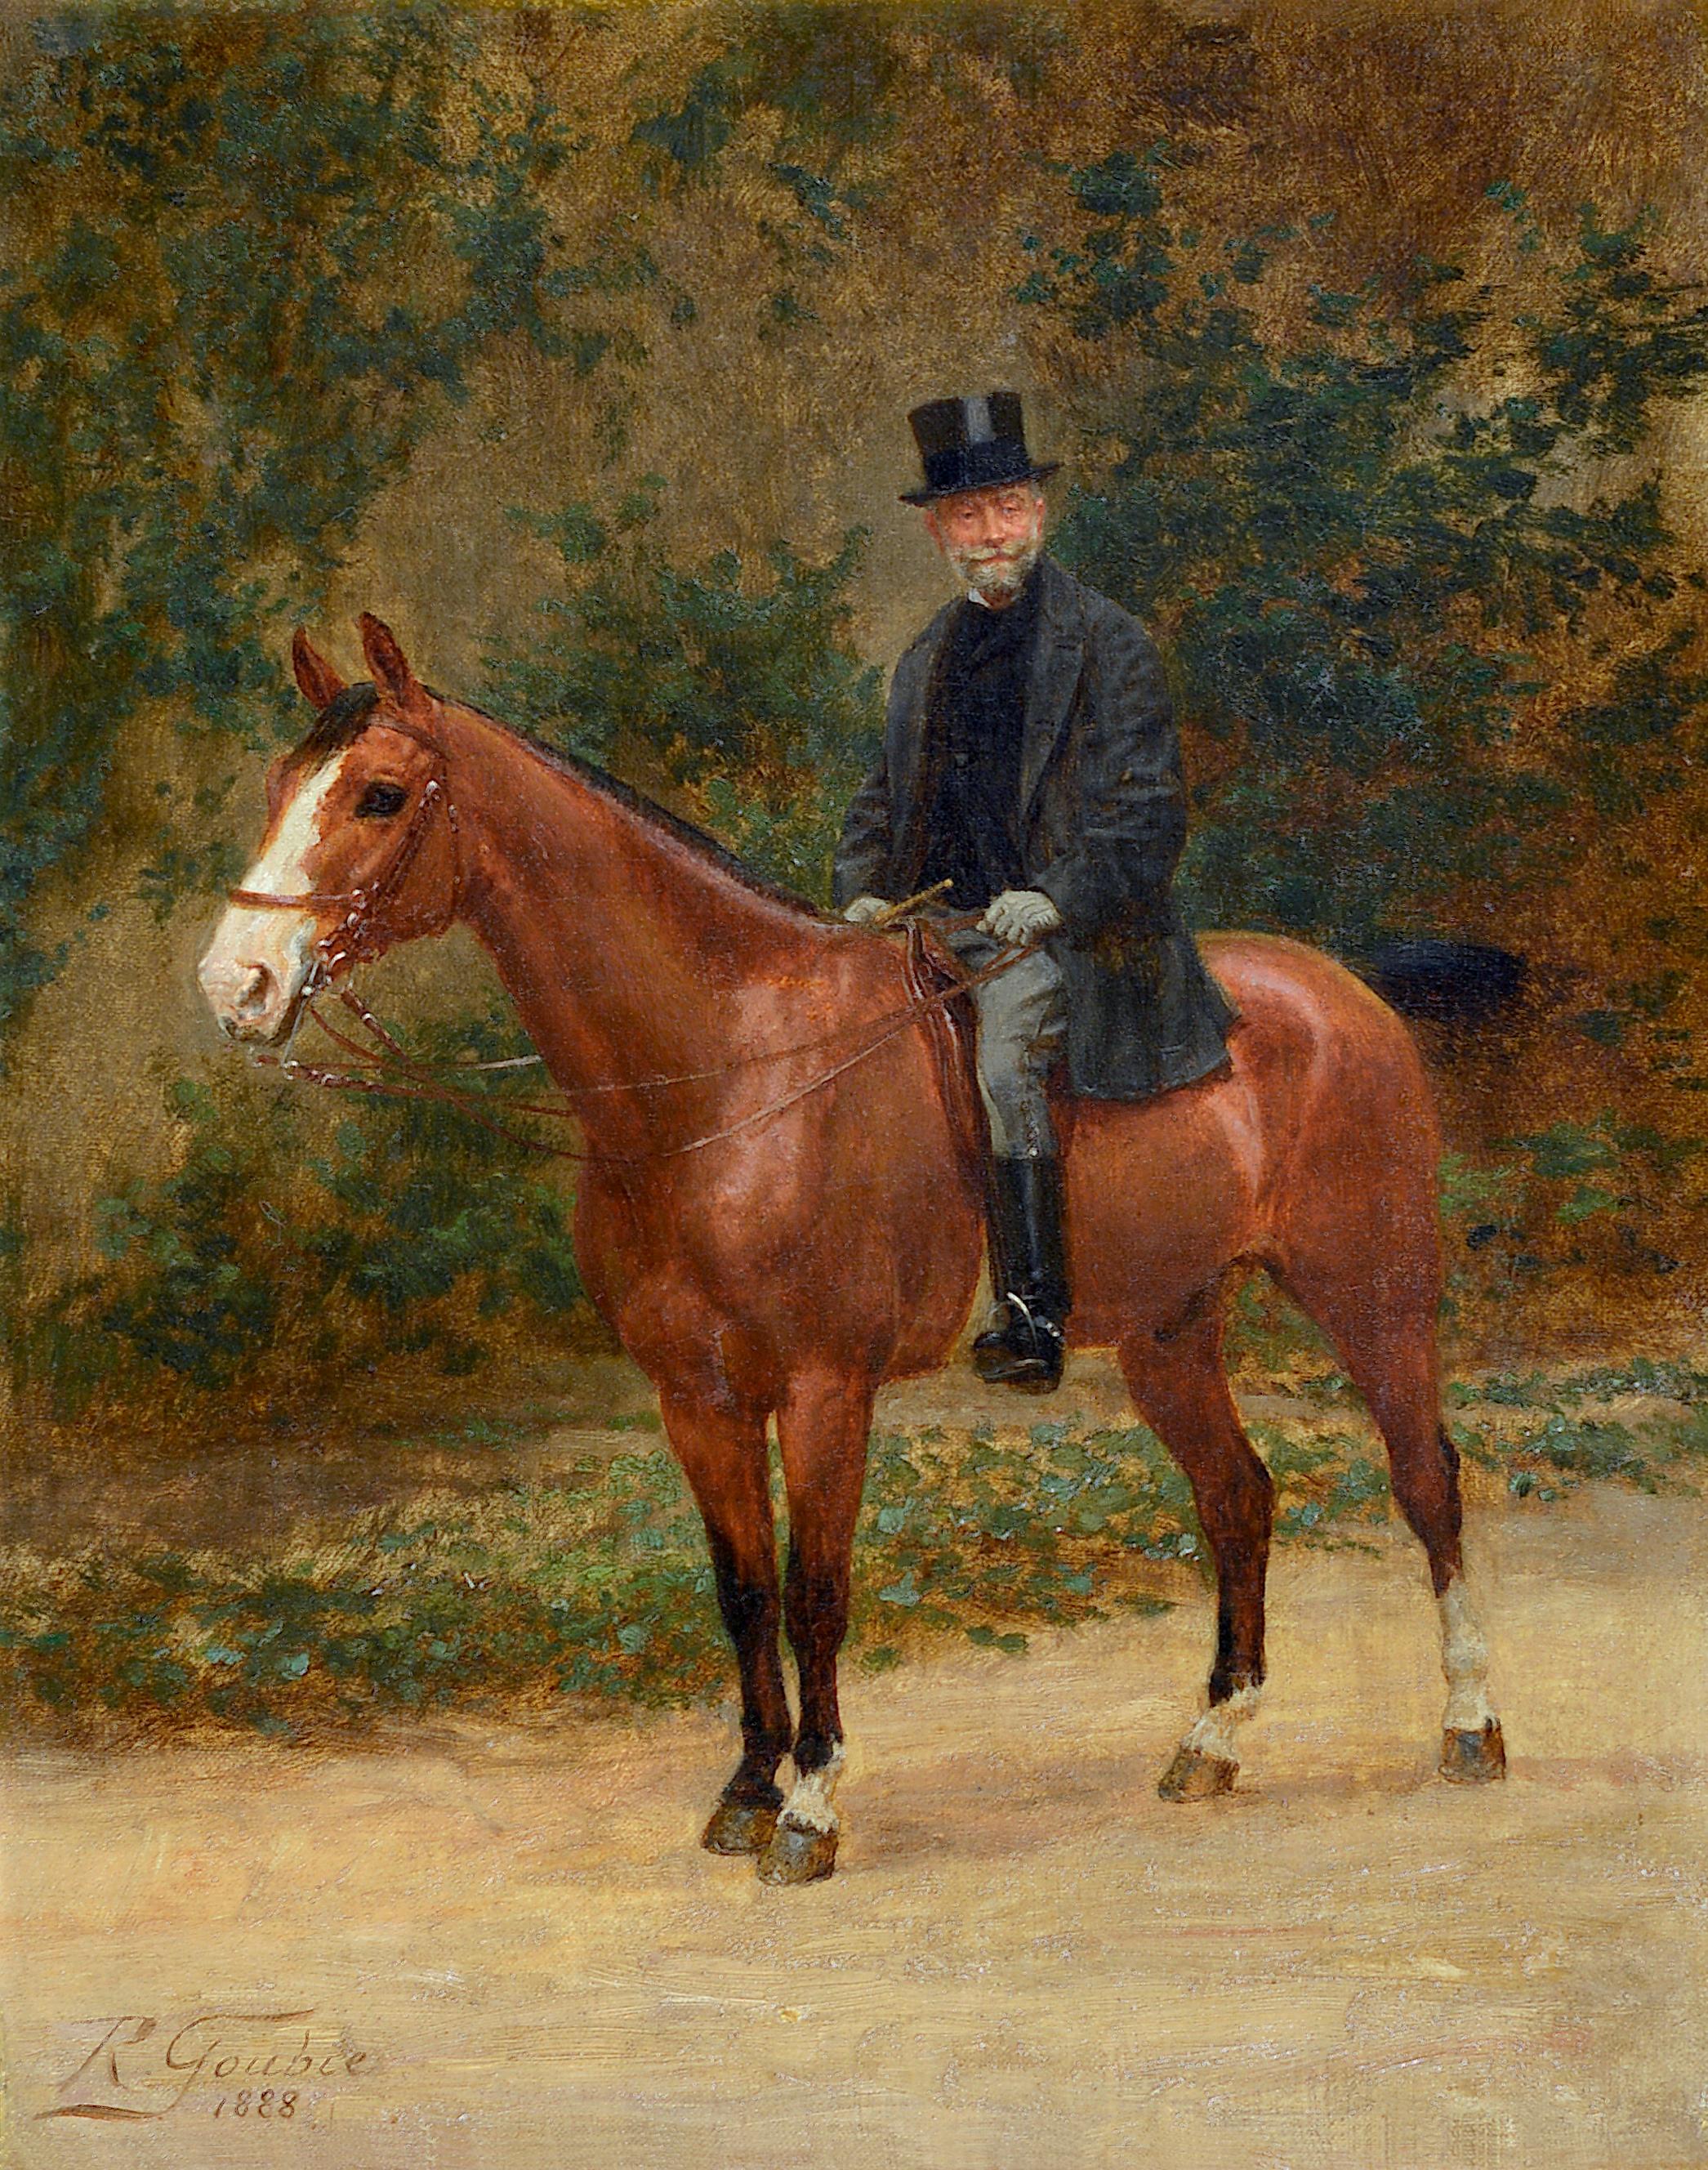 Portrait of a man on horseback - Painting by Jean Richard Goubie